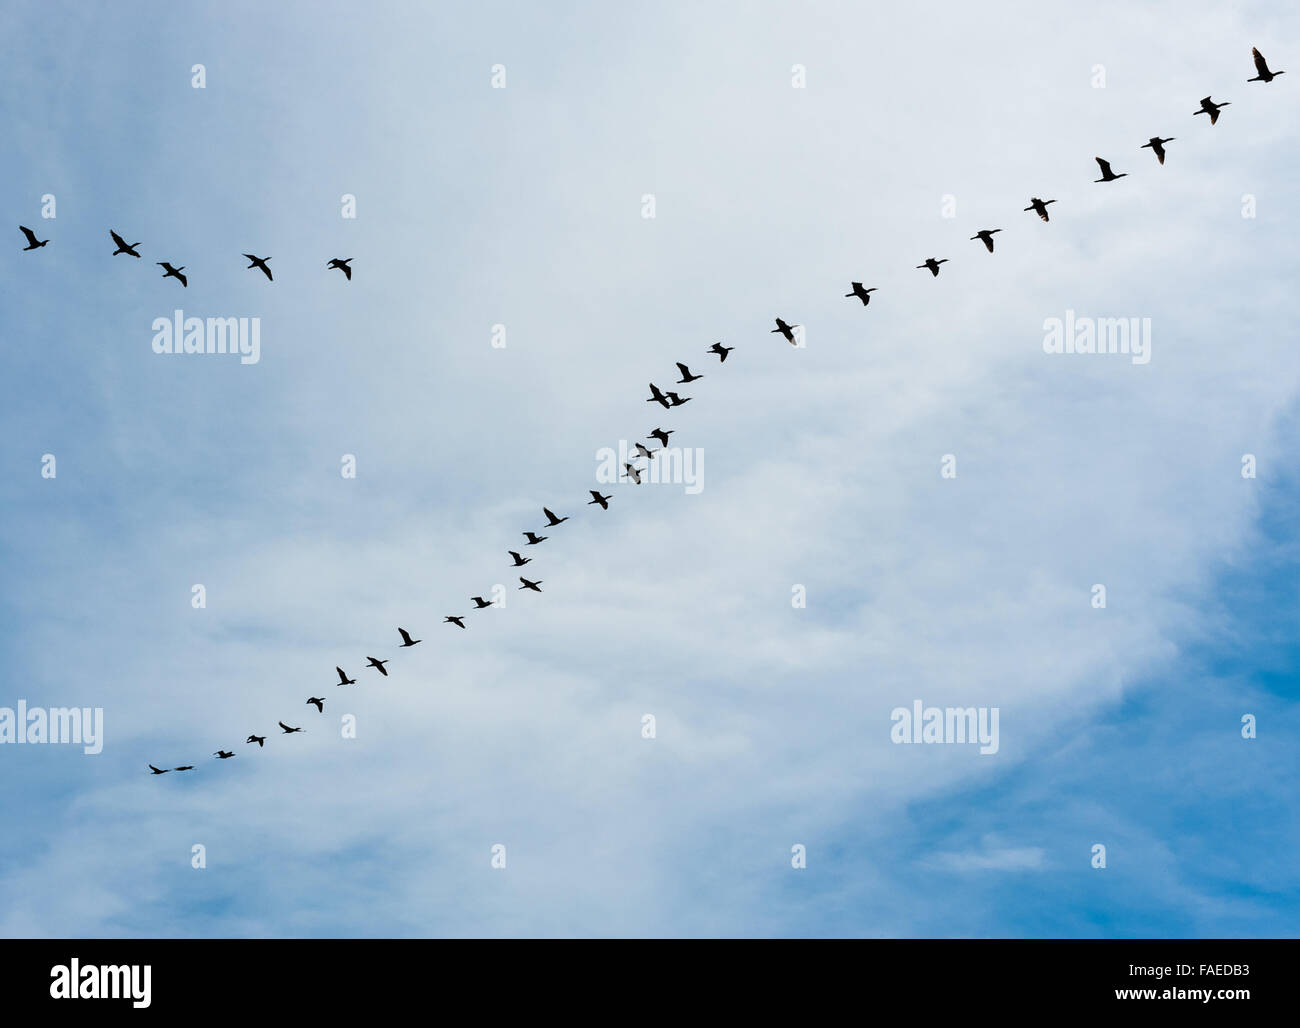 Herde von vielen Schwarzen Kormoran Vögel fliegen nach rechts in Echelon Bildung an bewölkten Himmel. Stockfoto